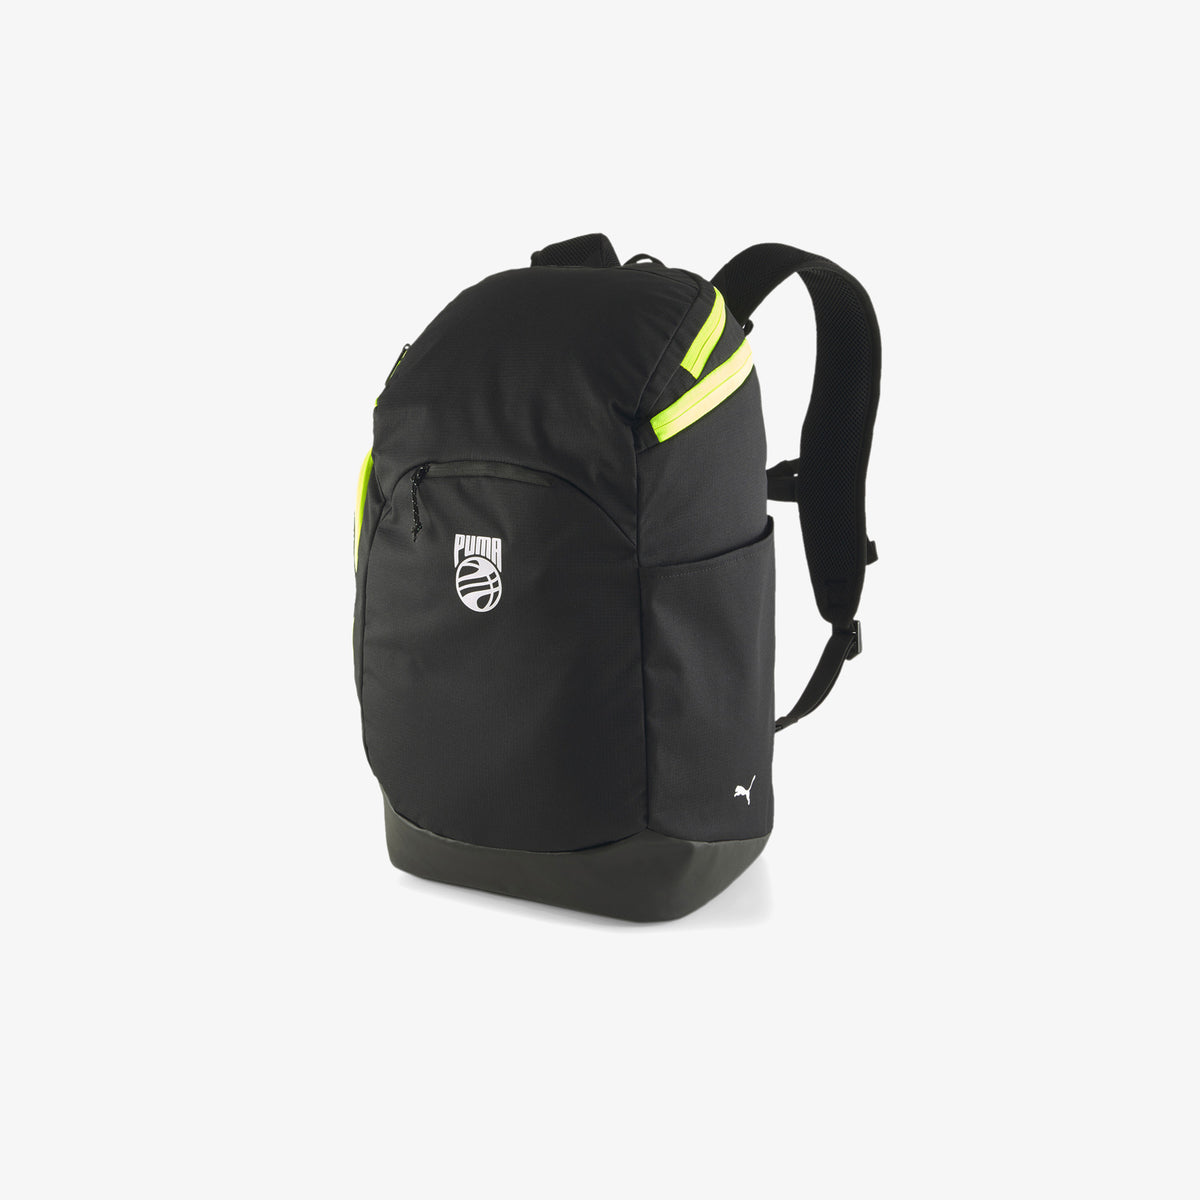 Pro Basketball Backpack - Black